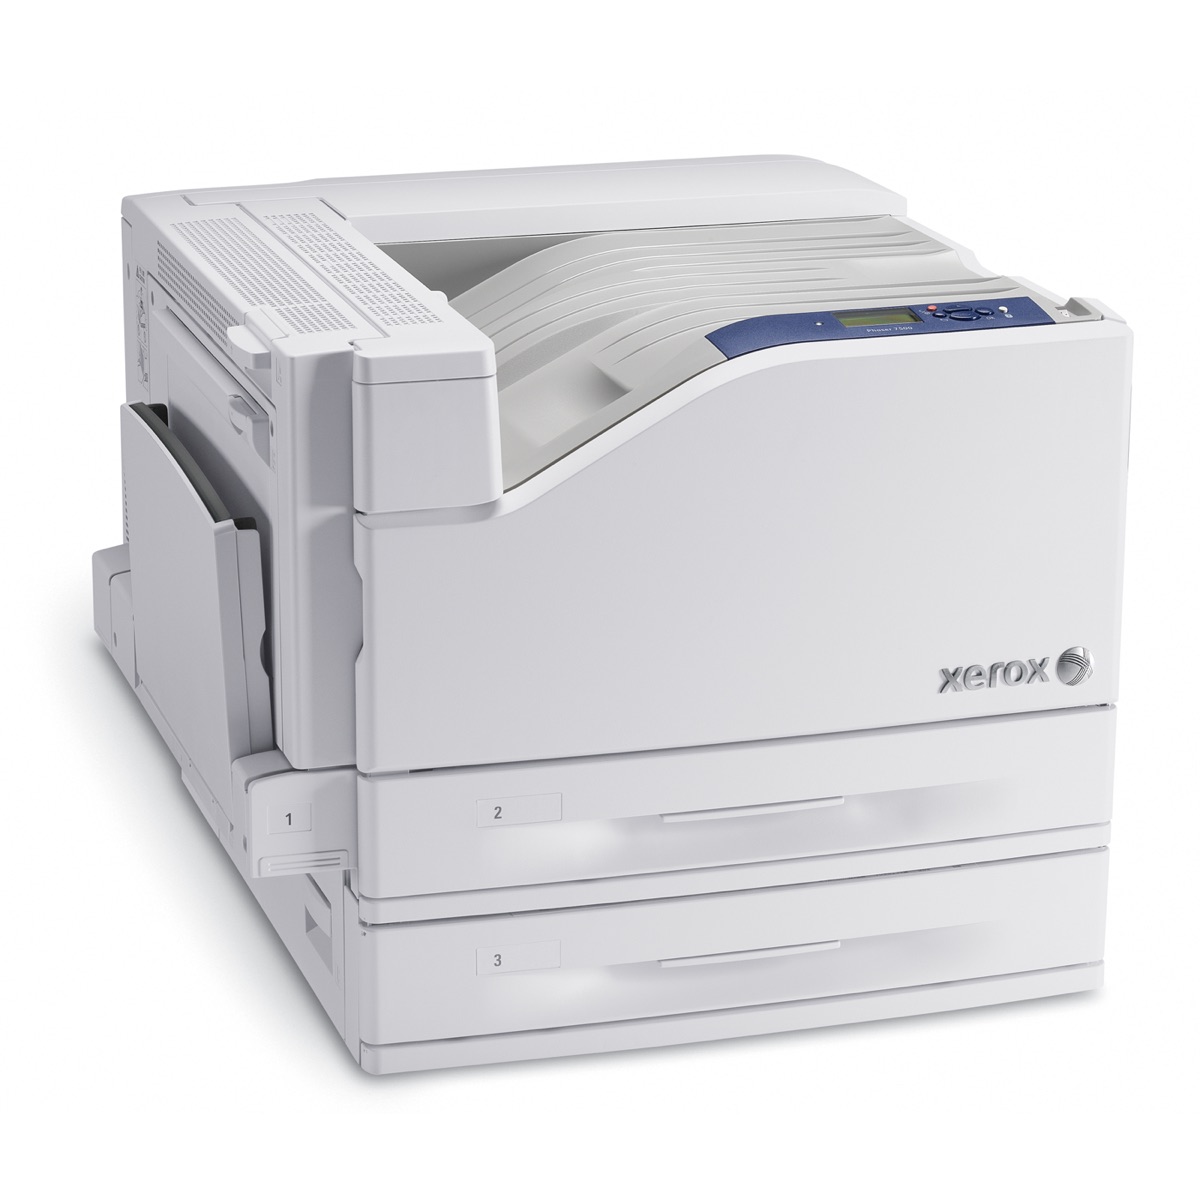 Xerox Printers:  The Xerox Phaser 7500DT Printer